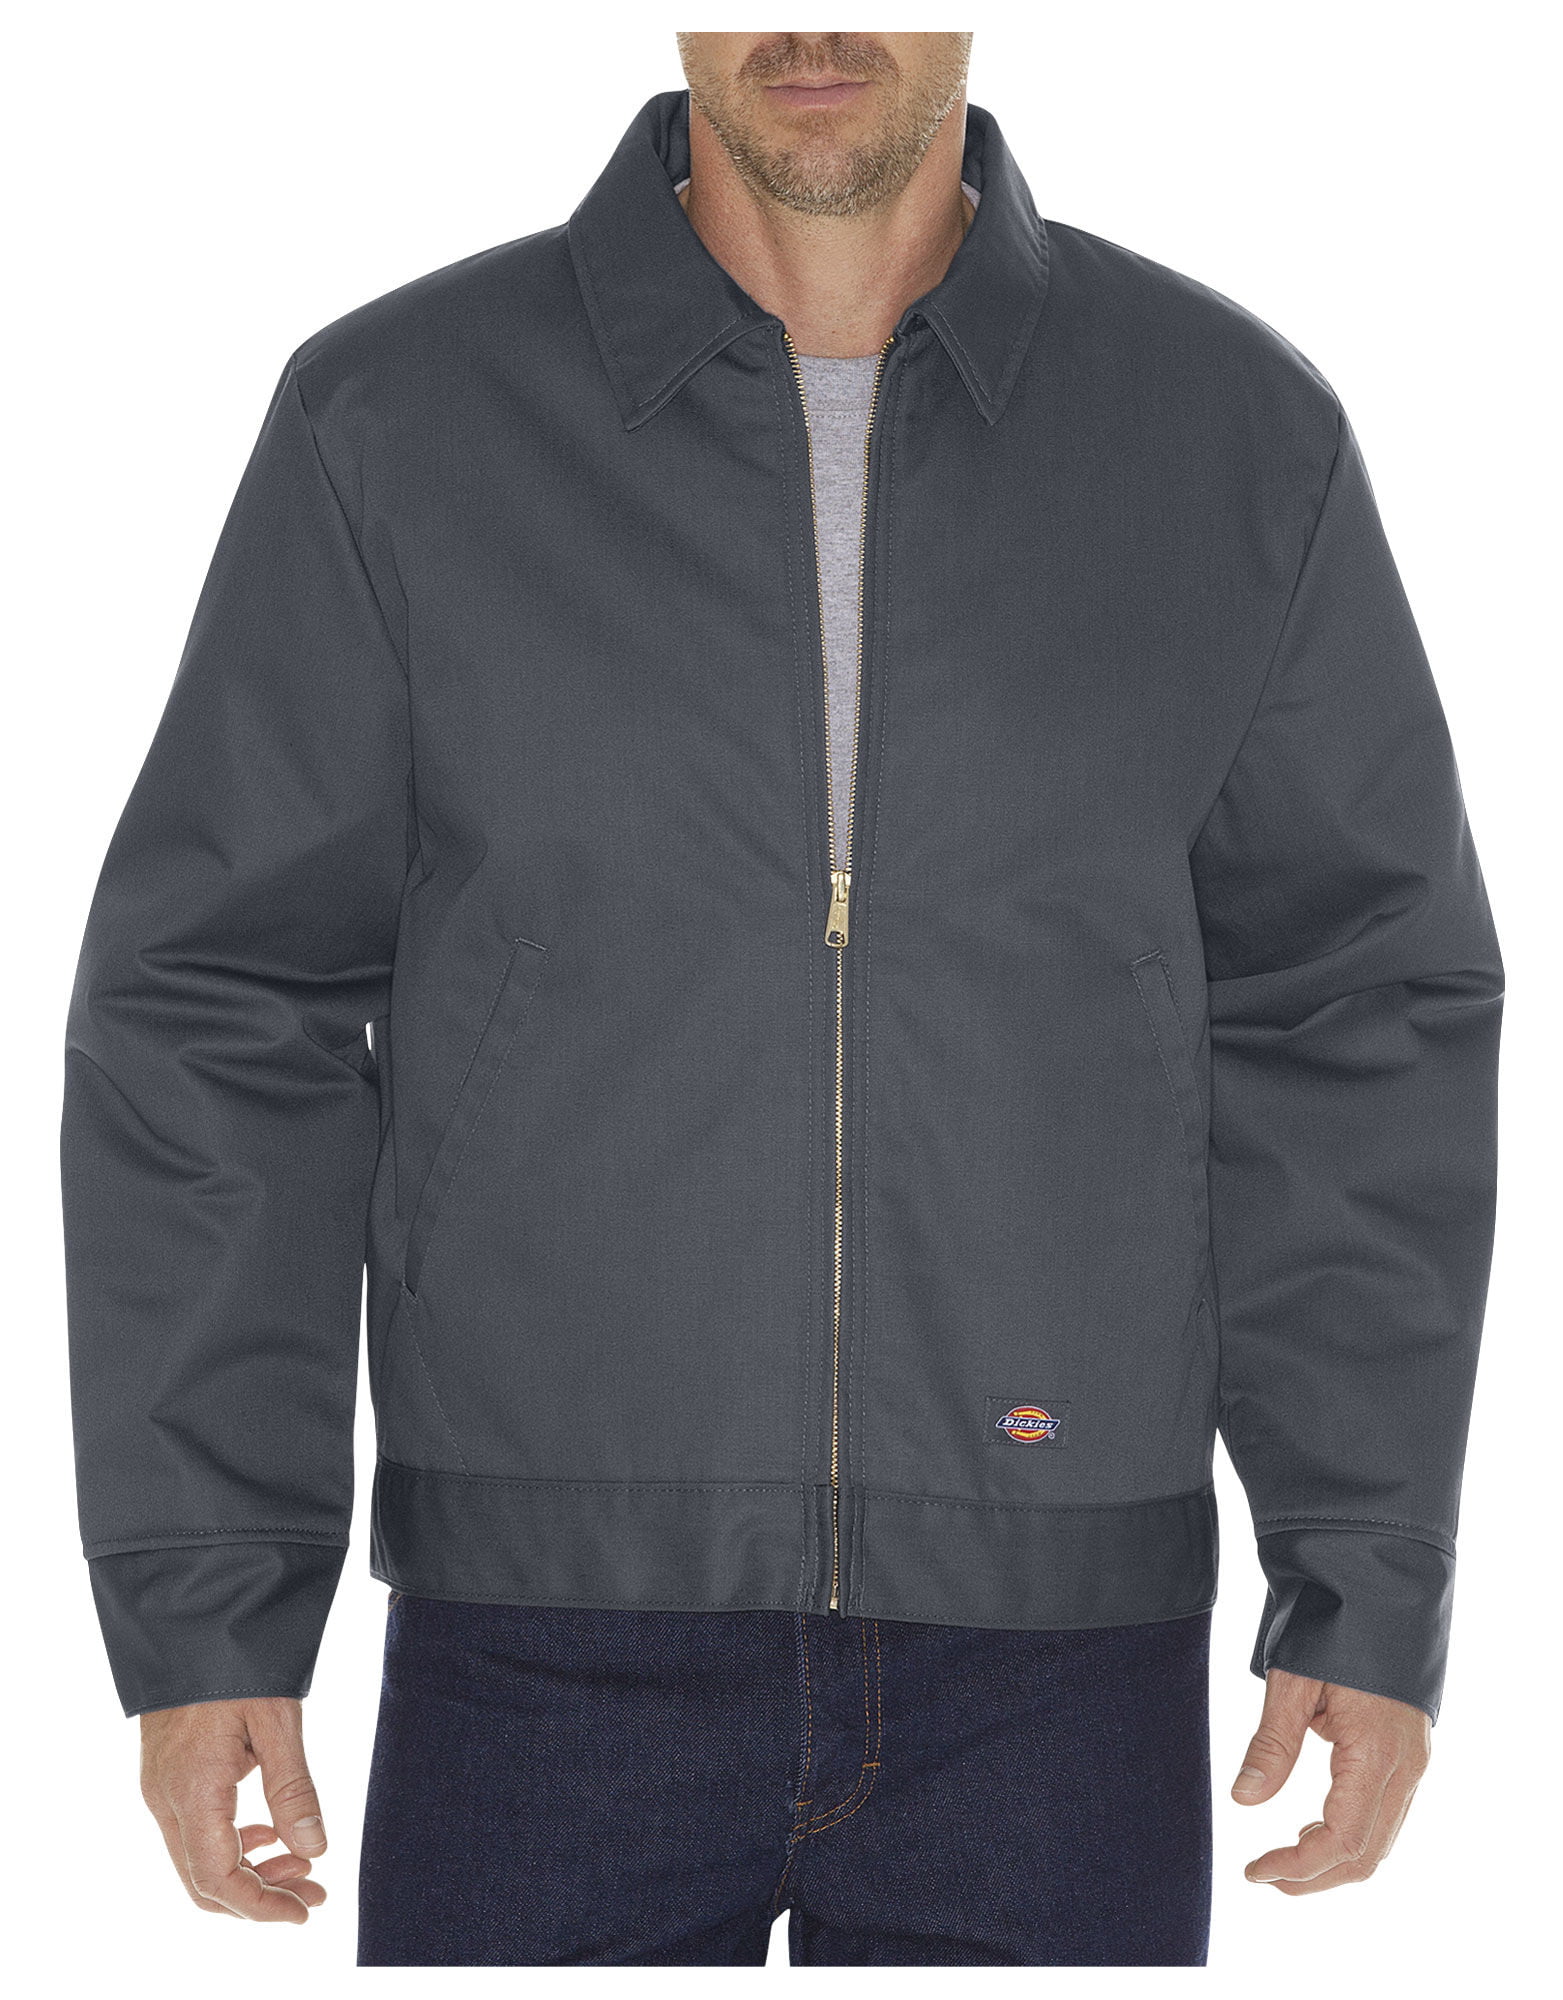 Dickies - Mens Insulated Eisenhower Jacket, Charcoal - 2X RG - Walmart.com